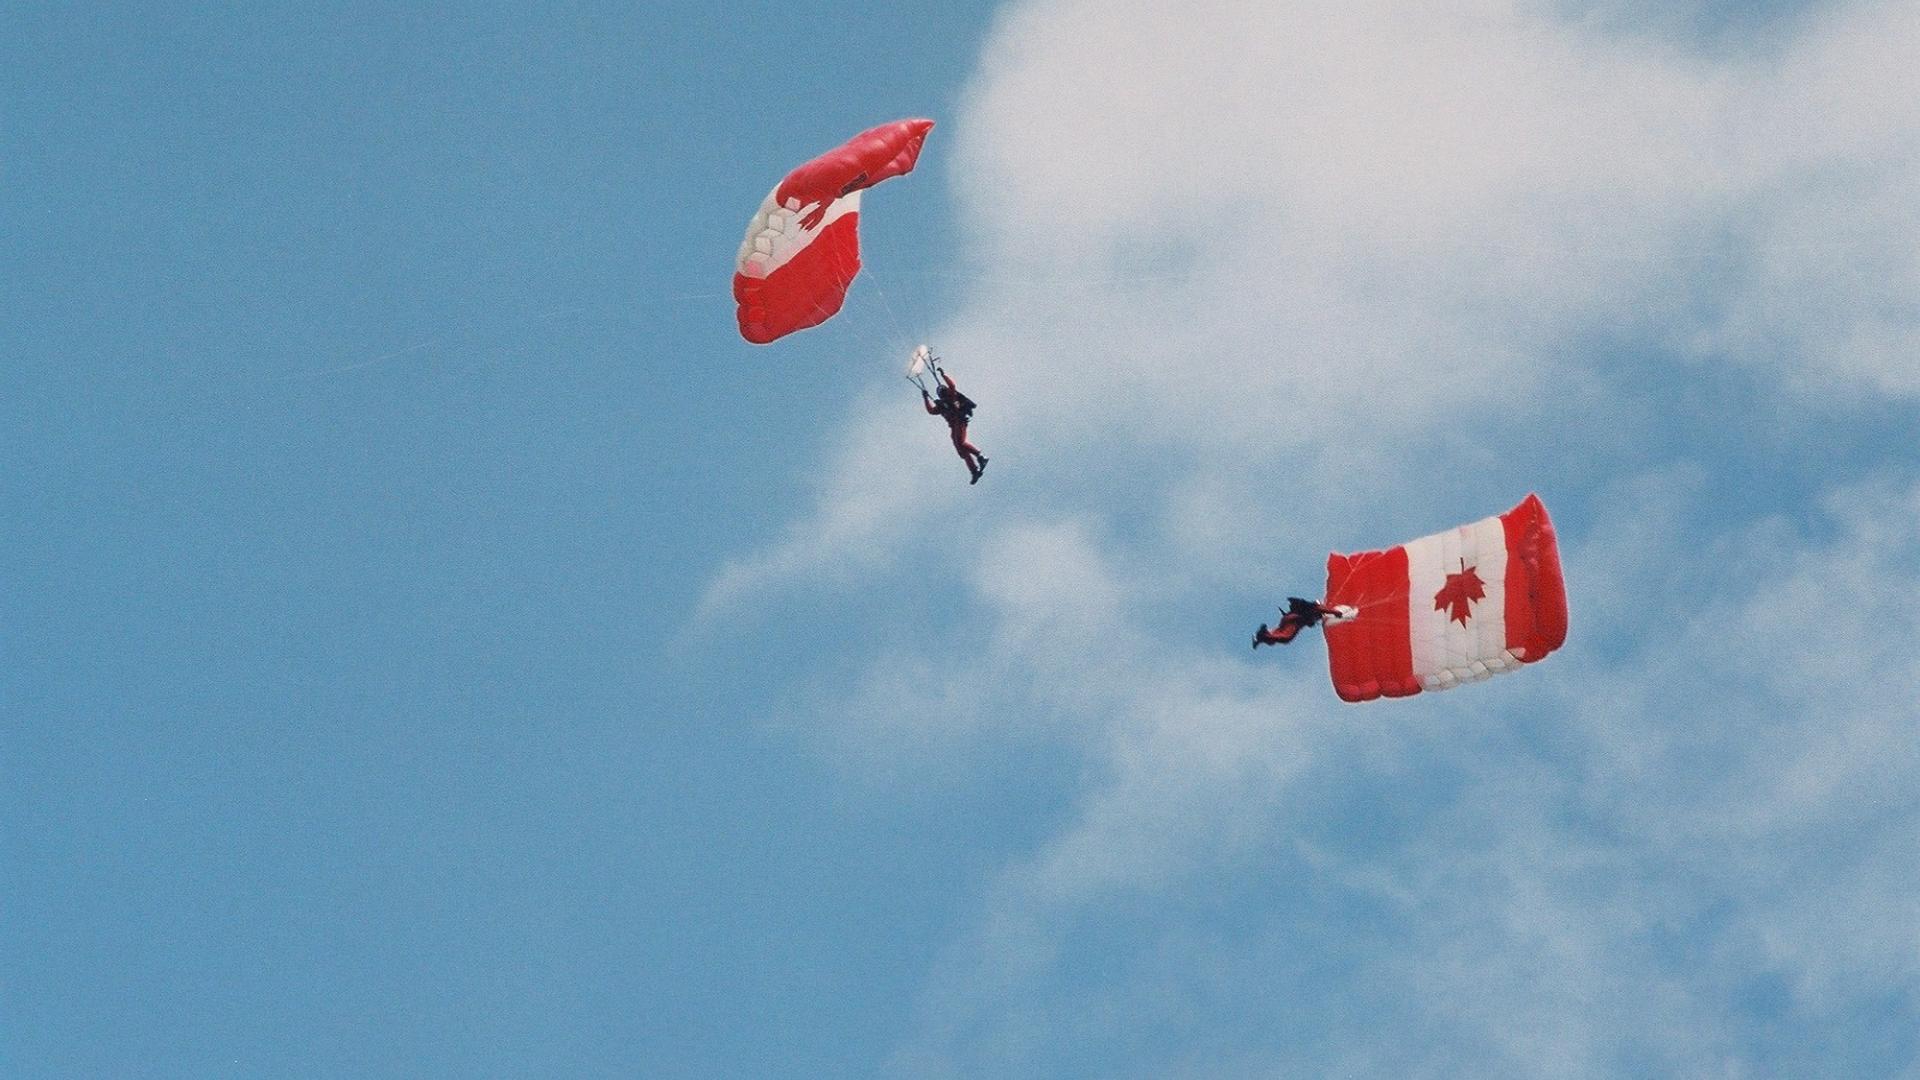 Parachuter sailing through the sky. The parachute has a Canadian flag design. The parachuter is waving the Canadian flag.